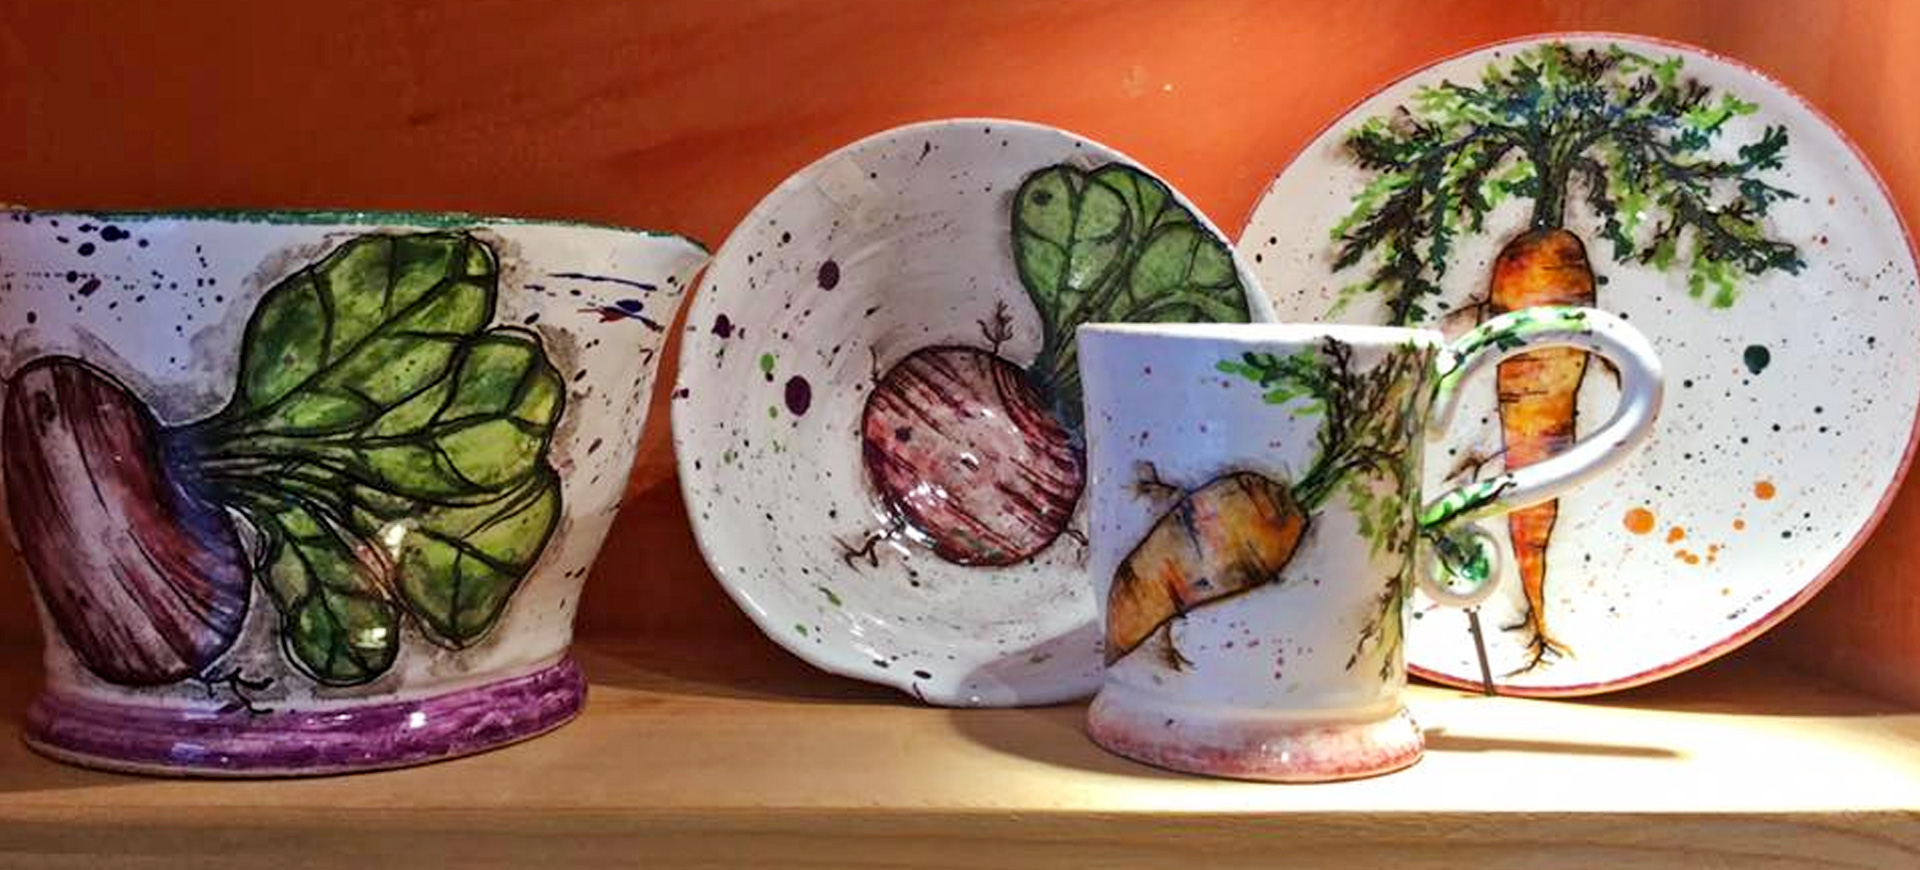 Triziapic Collection Handmade ceramic